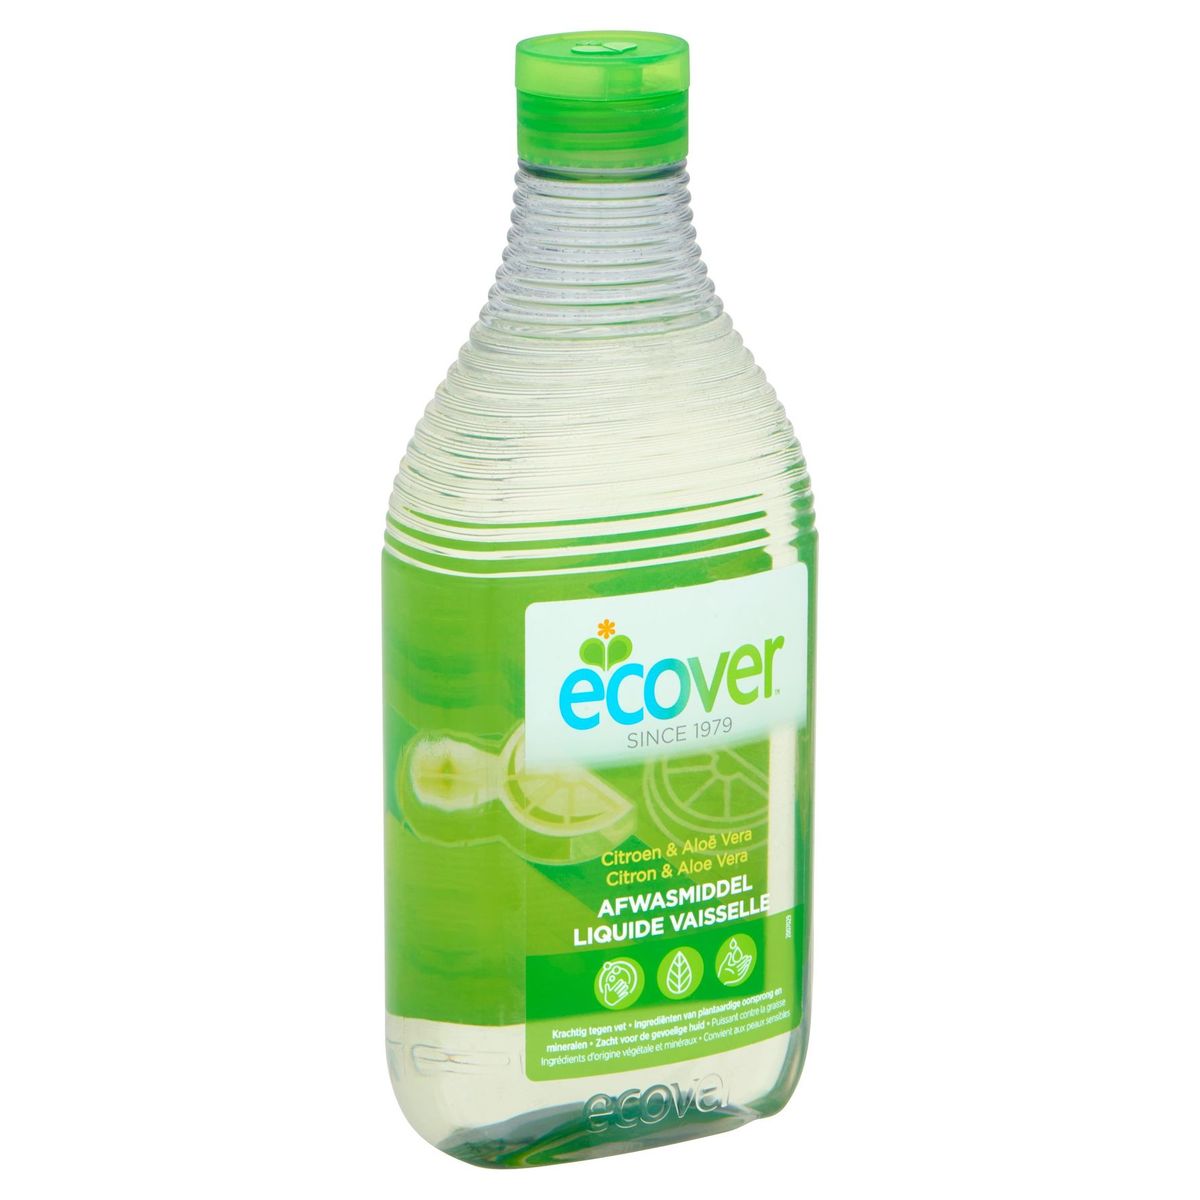 Ecover Citron & Aloe Vera Liquide Vaisselle - 450 ml